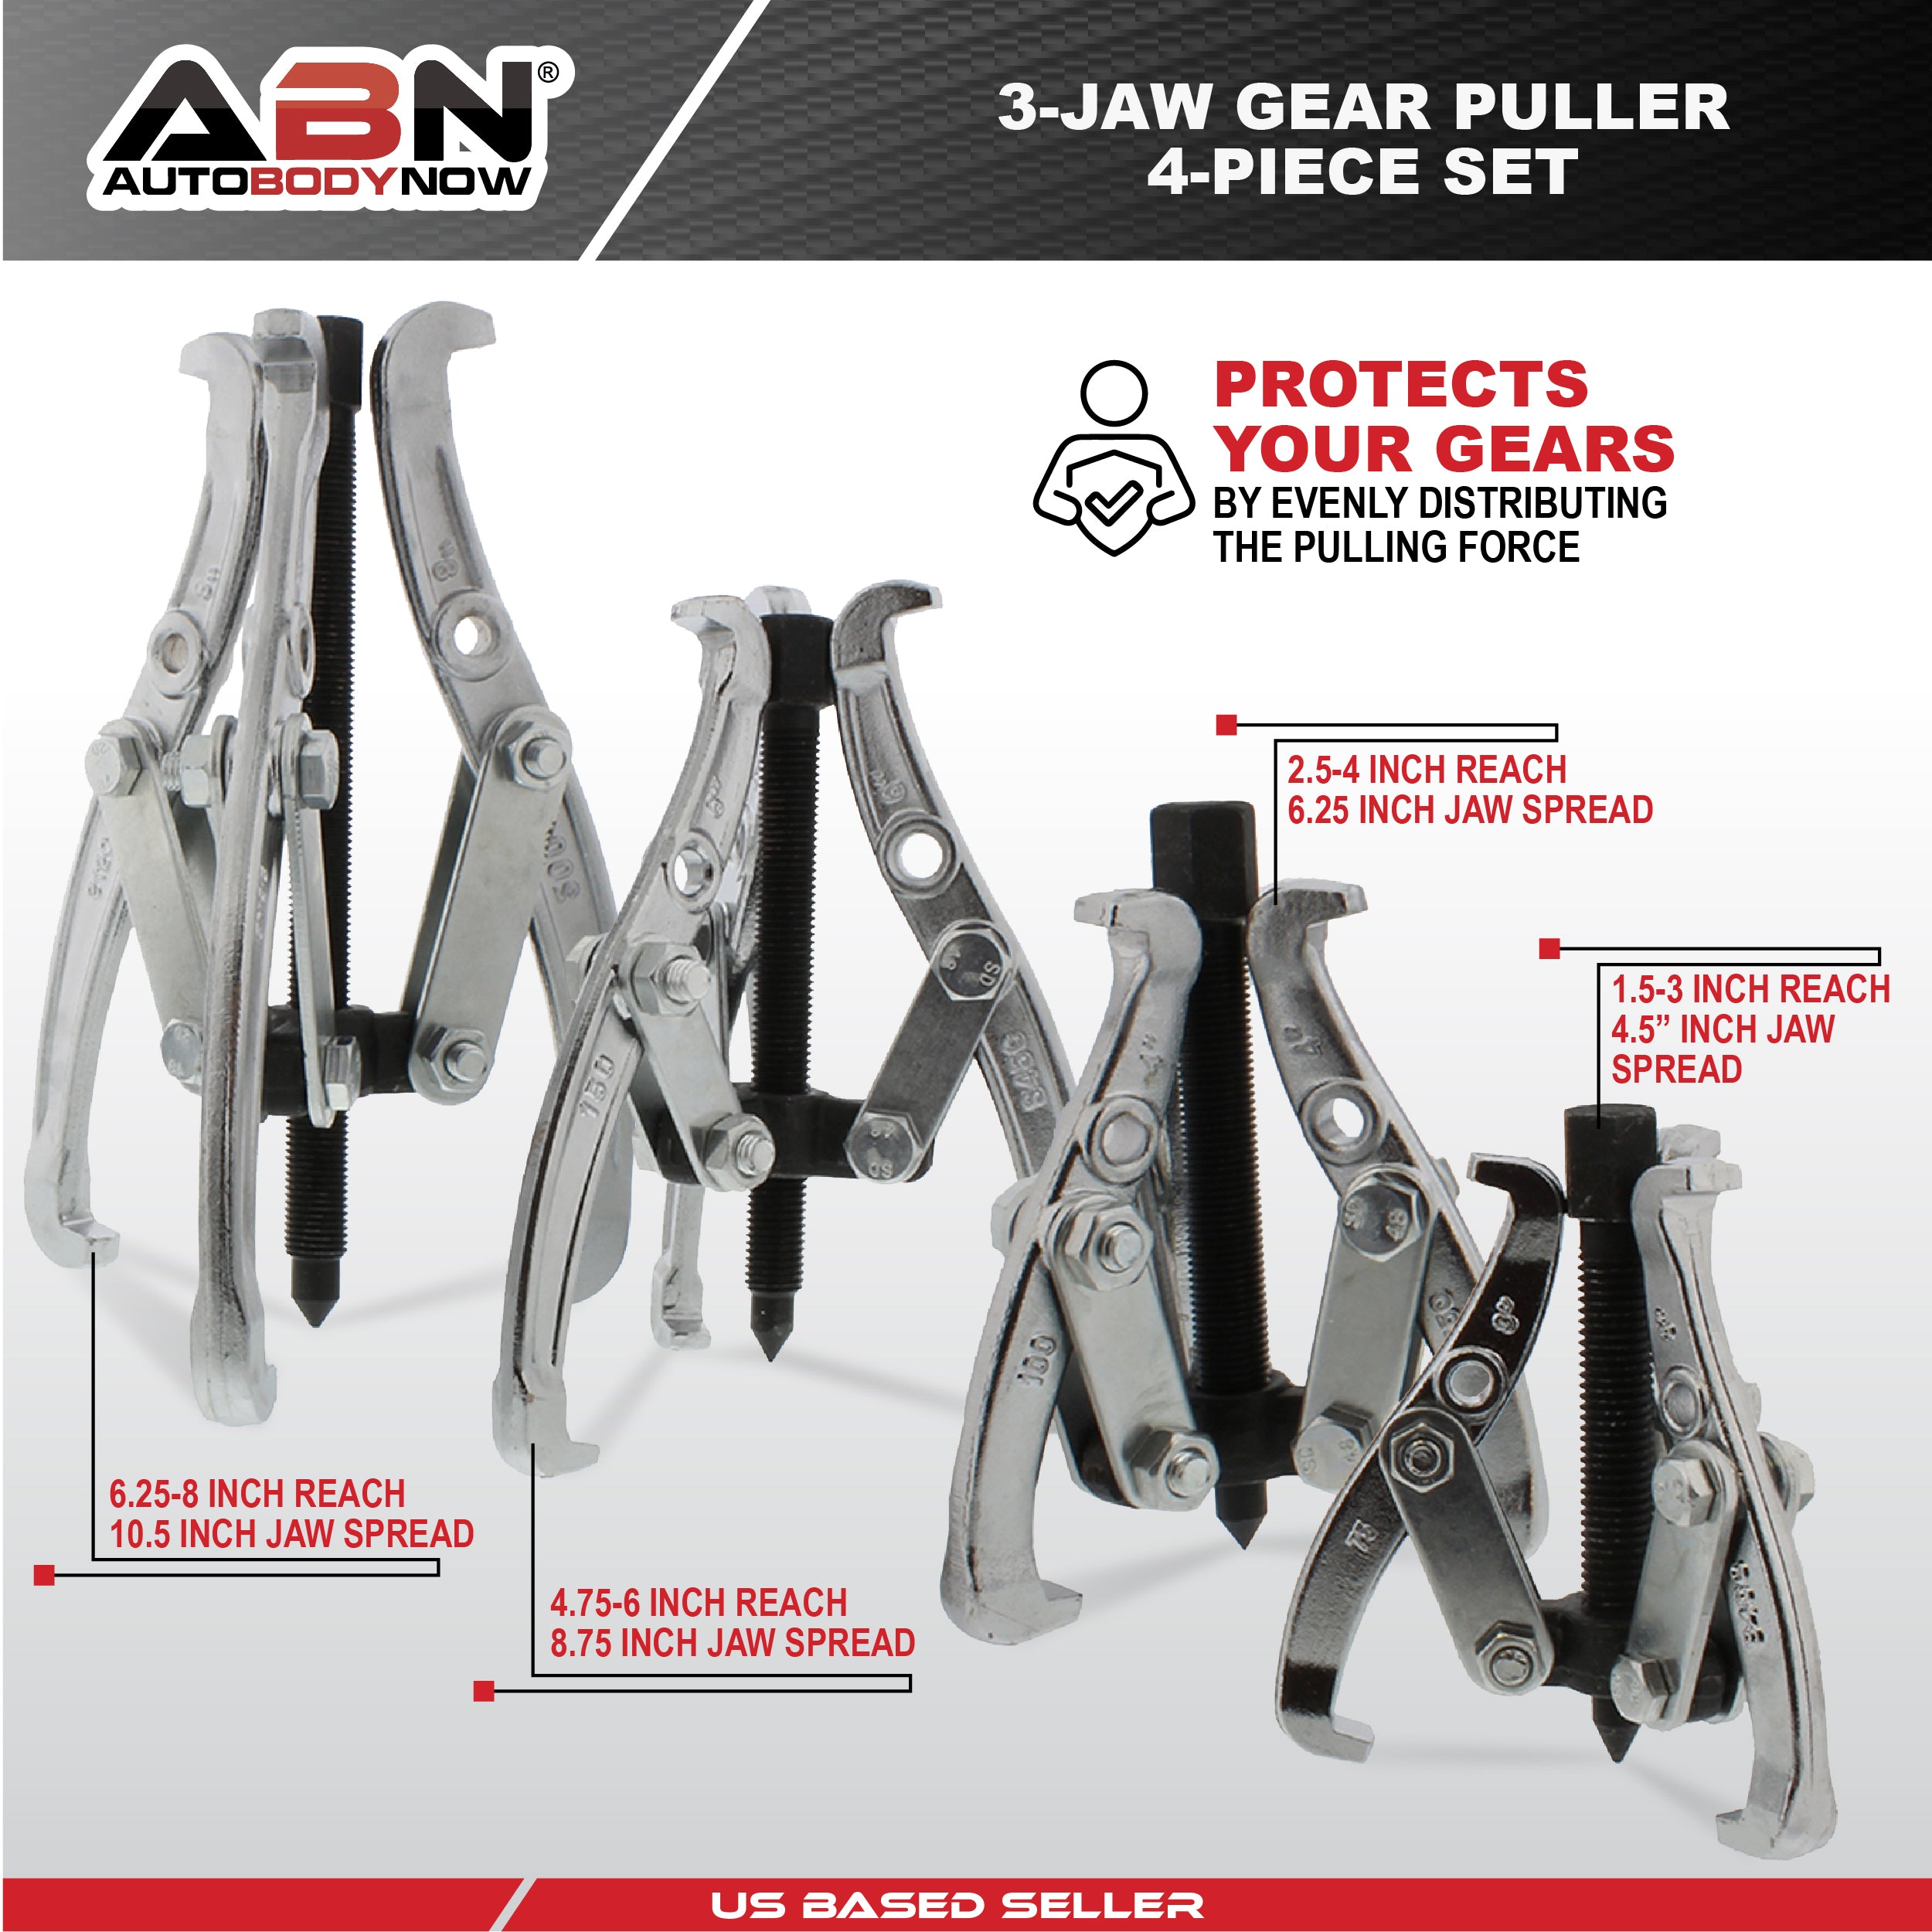 3-Jaw Gear Puller 4-Piece Set Removal Kit for Gears, Pulley, Flywheel